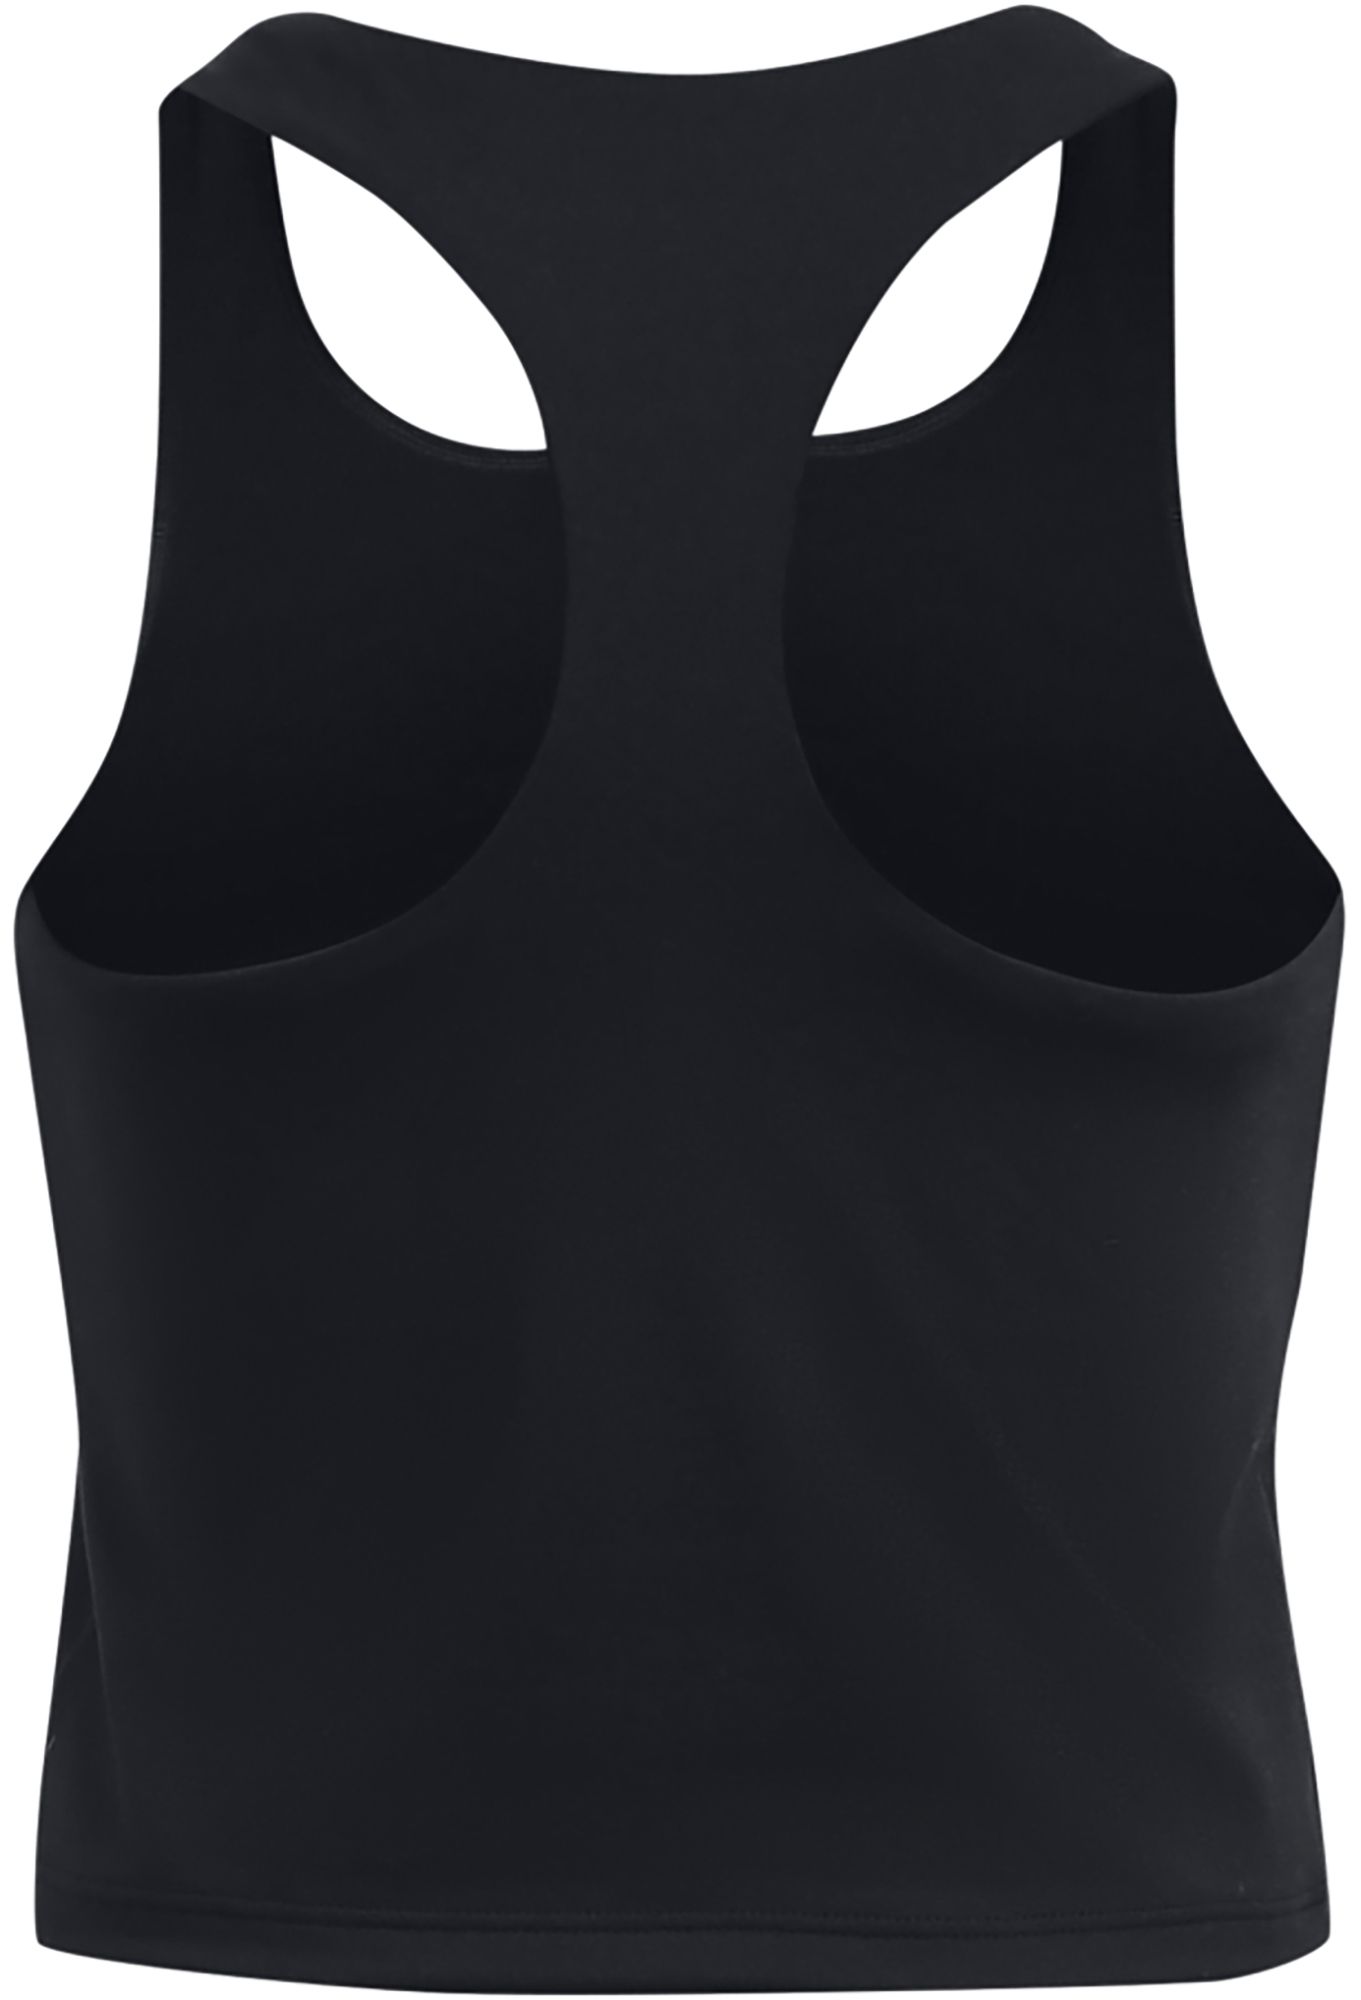 Soma Nonstop Crop Top with Built-In Shelf Bra, Black, Size M